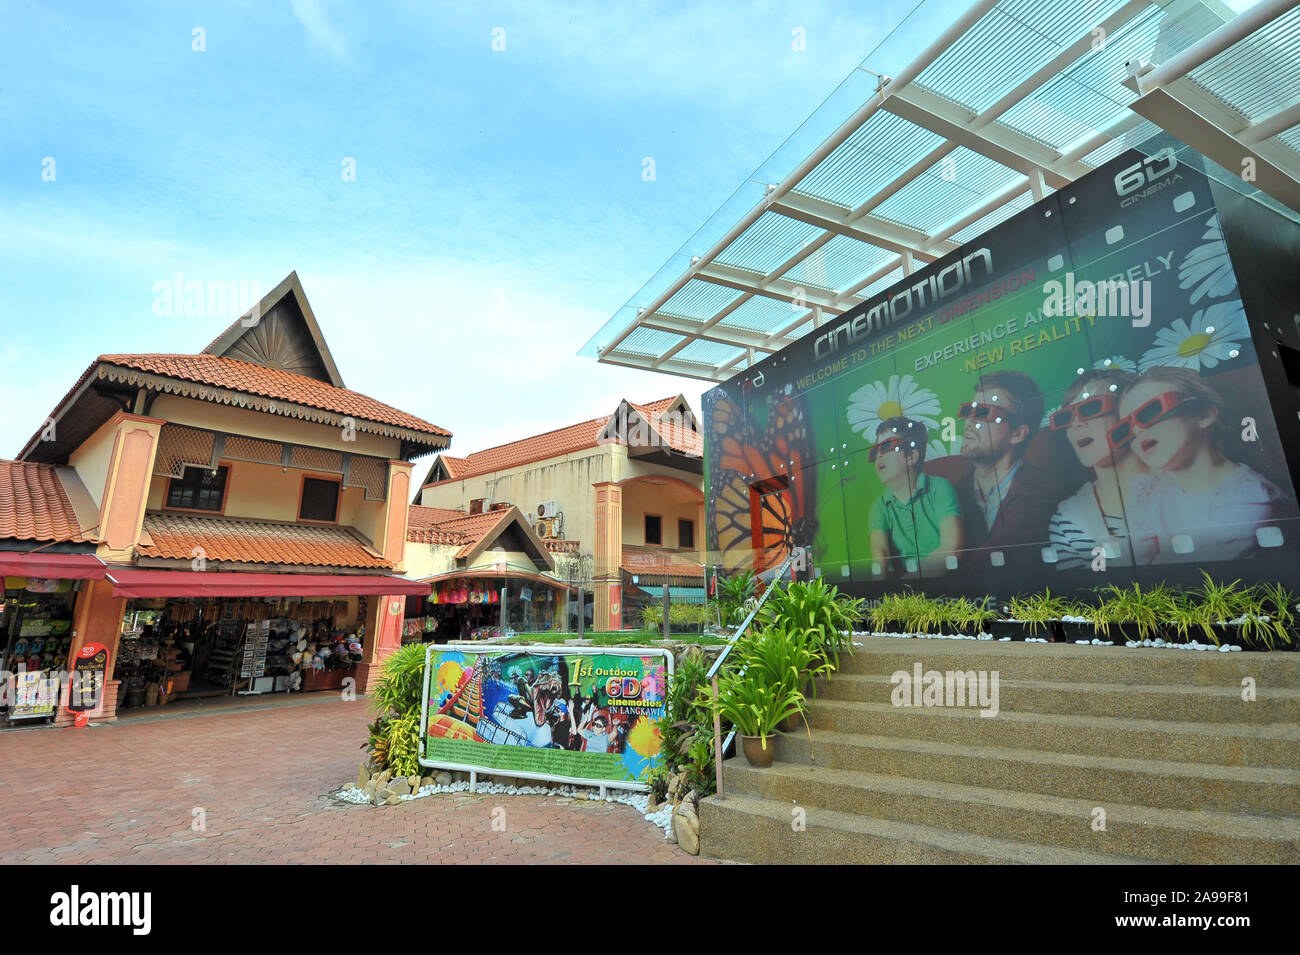 6D THEATRE  - LANGKAWI, MALAYSIA. Stock Photo